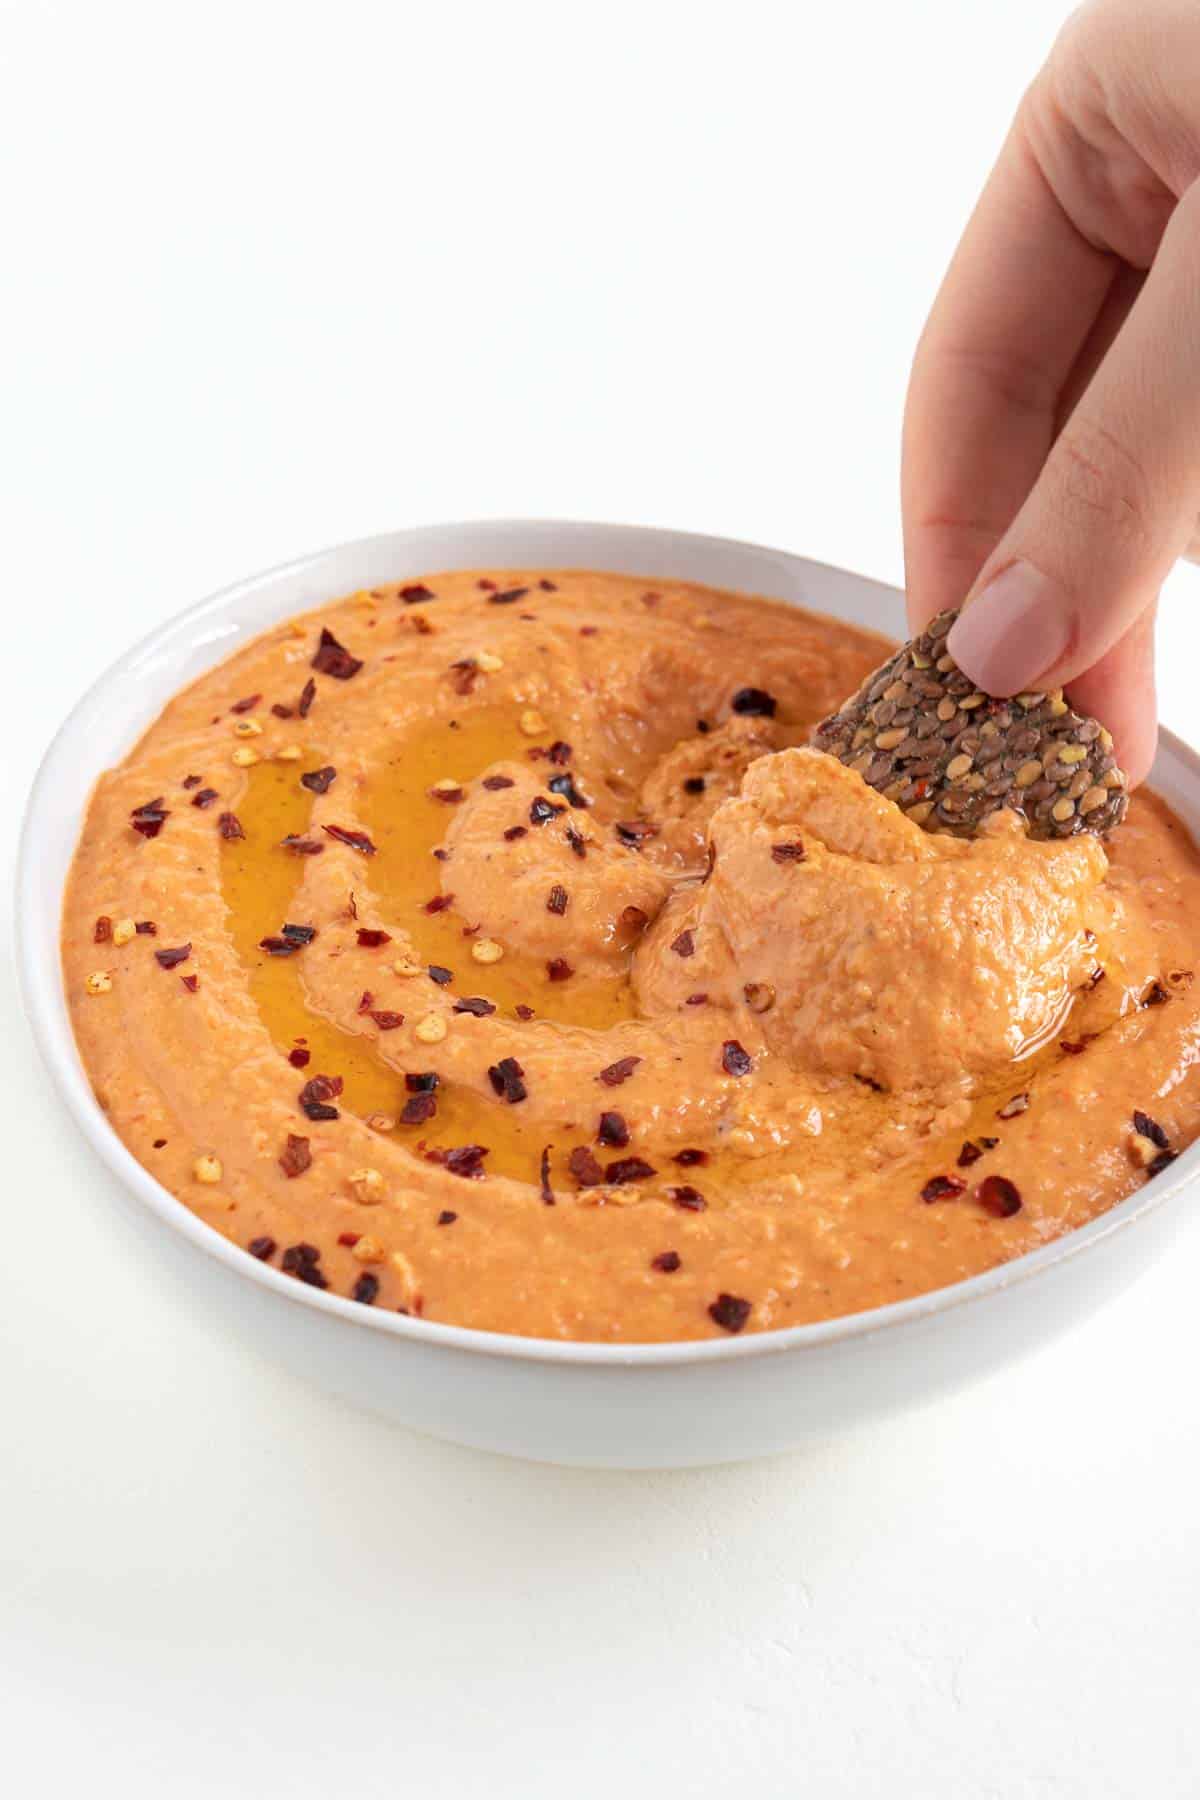 a hand dipping a cracker into hummus